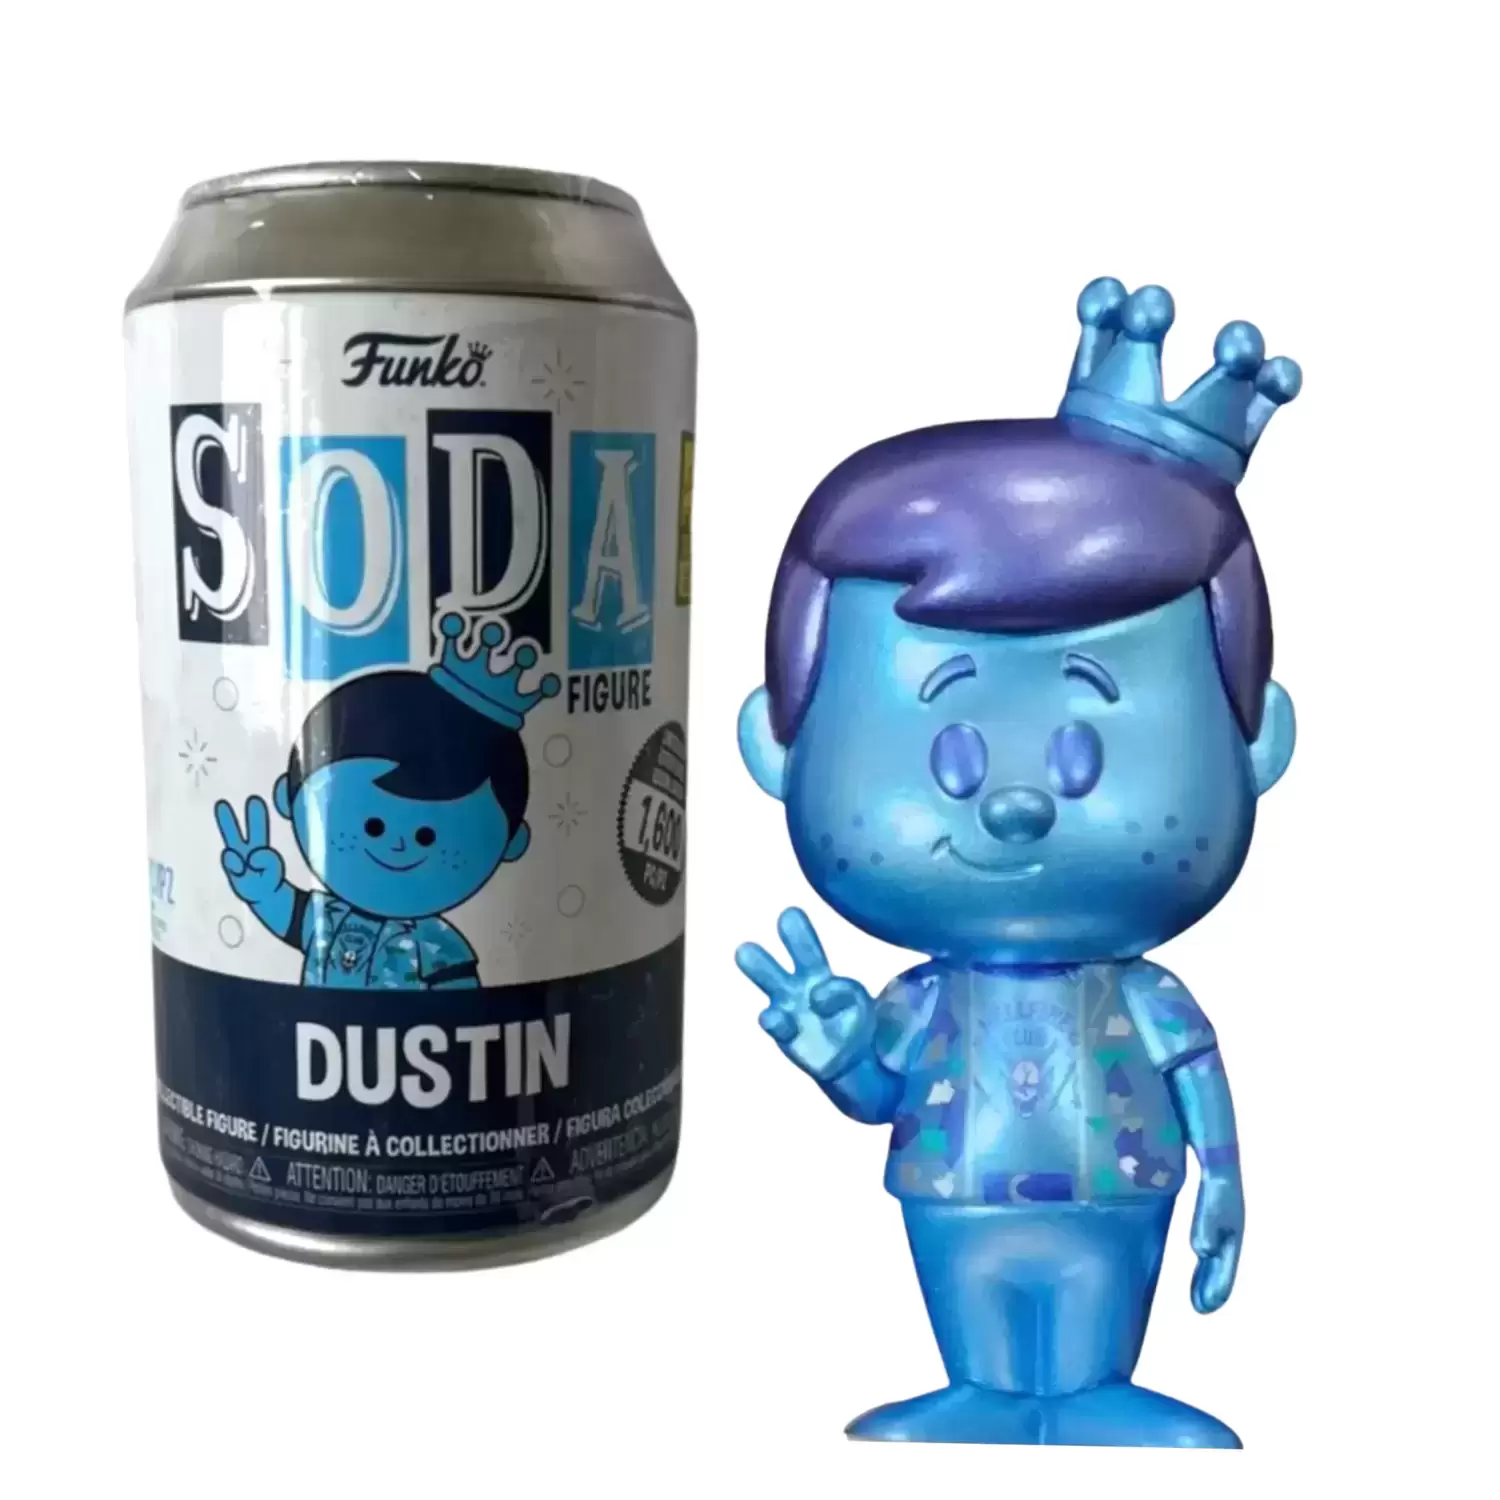 Vinyl Soda! - Freddy Funko as Dustin